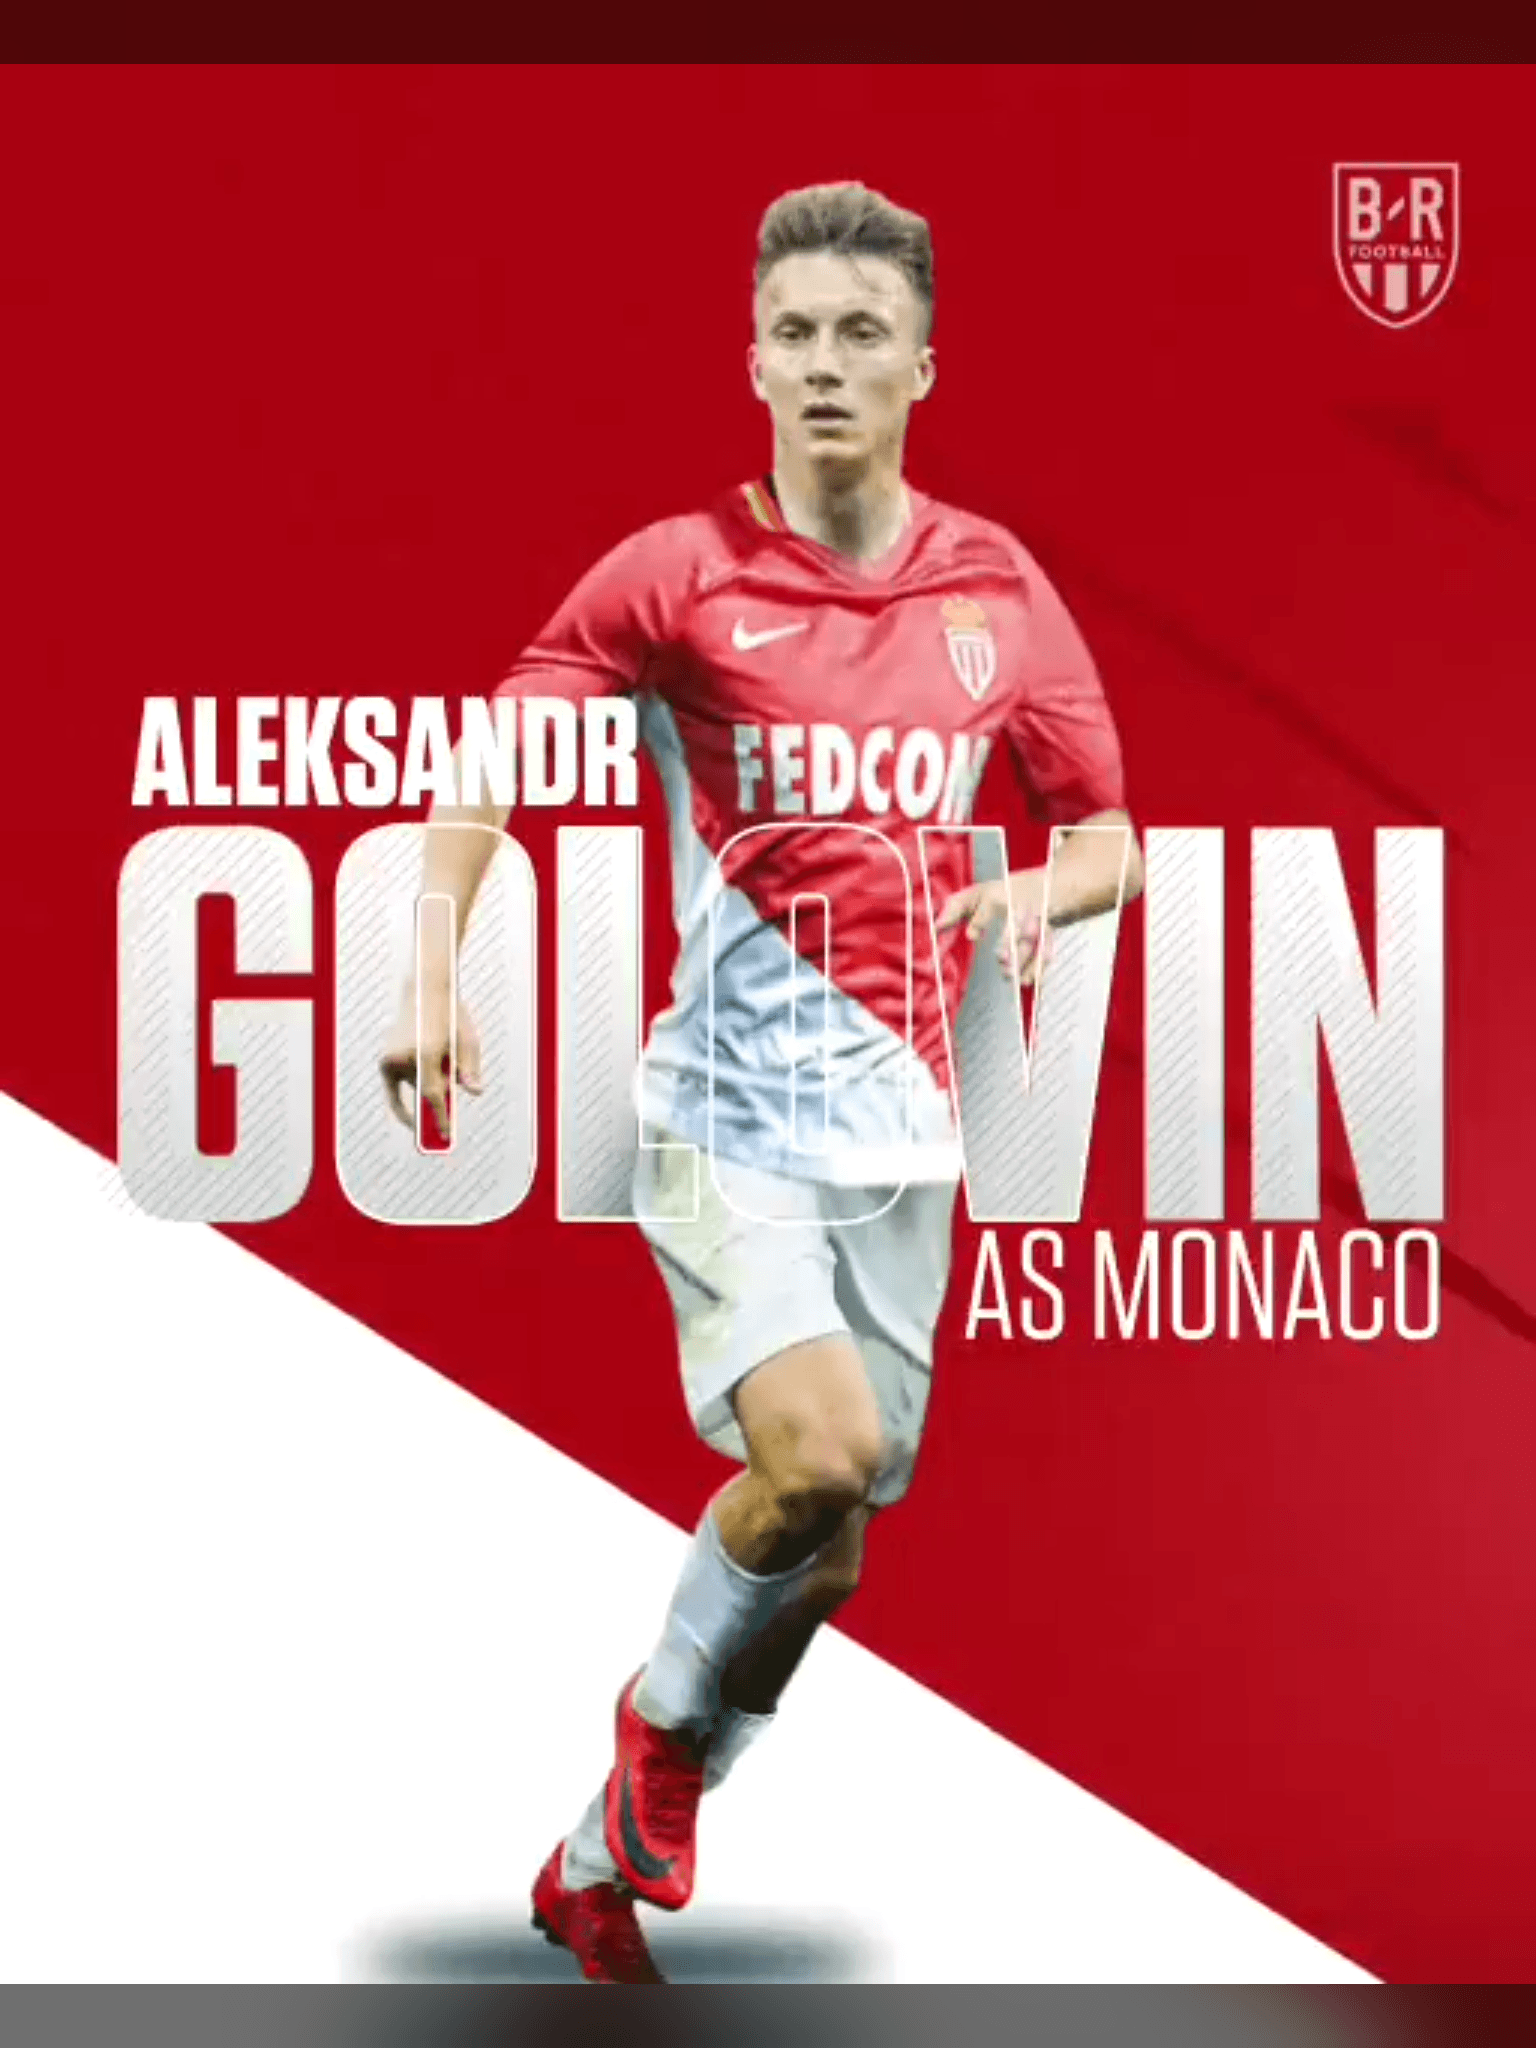 A.S Monaco's Aleksander Golovin Credit To On Twitter